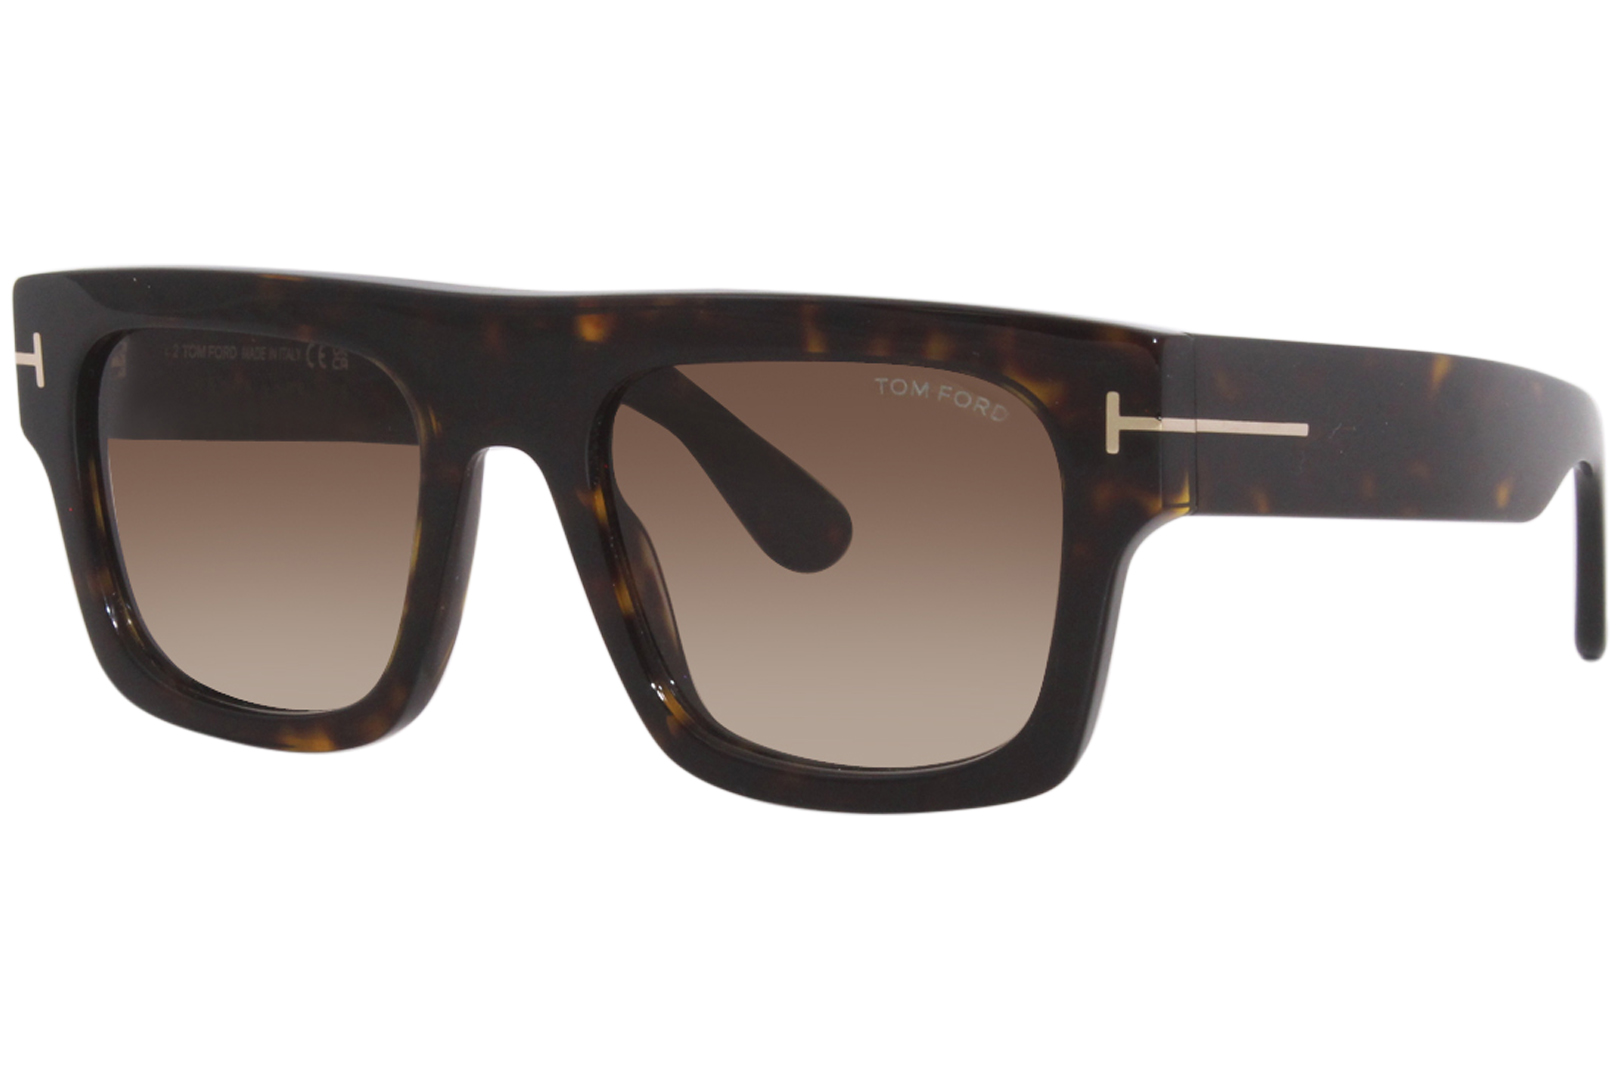 Tom Ford Fausto TF711 52F Sunglasses Men's Shiny Dark Havana/Brown Gradient 53mm | EyeSpecs.com